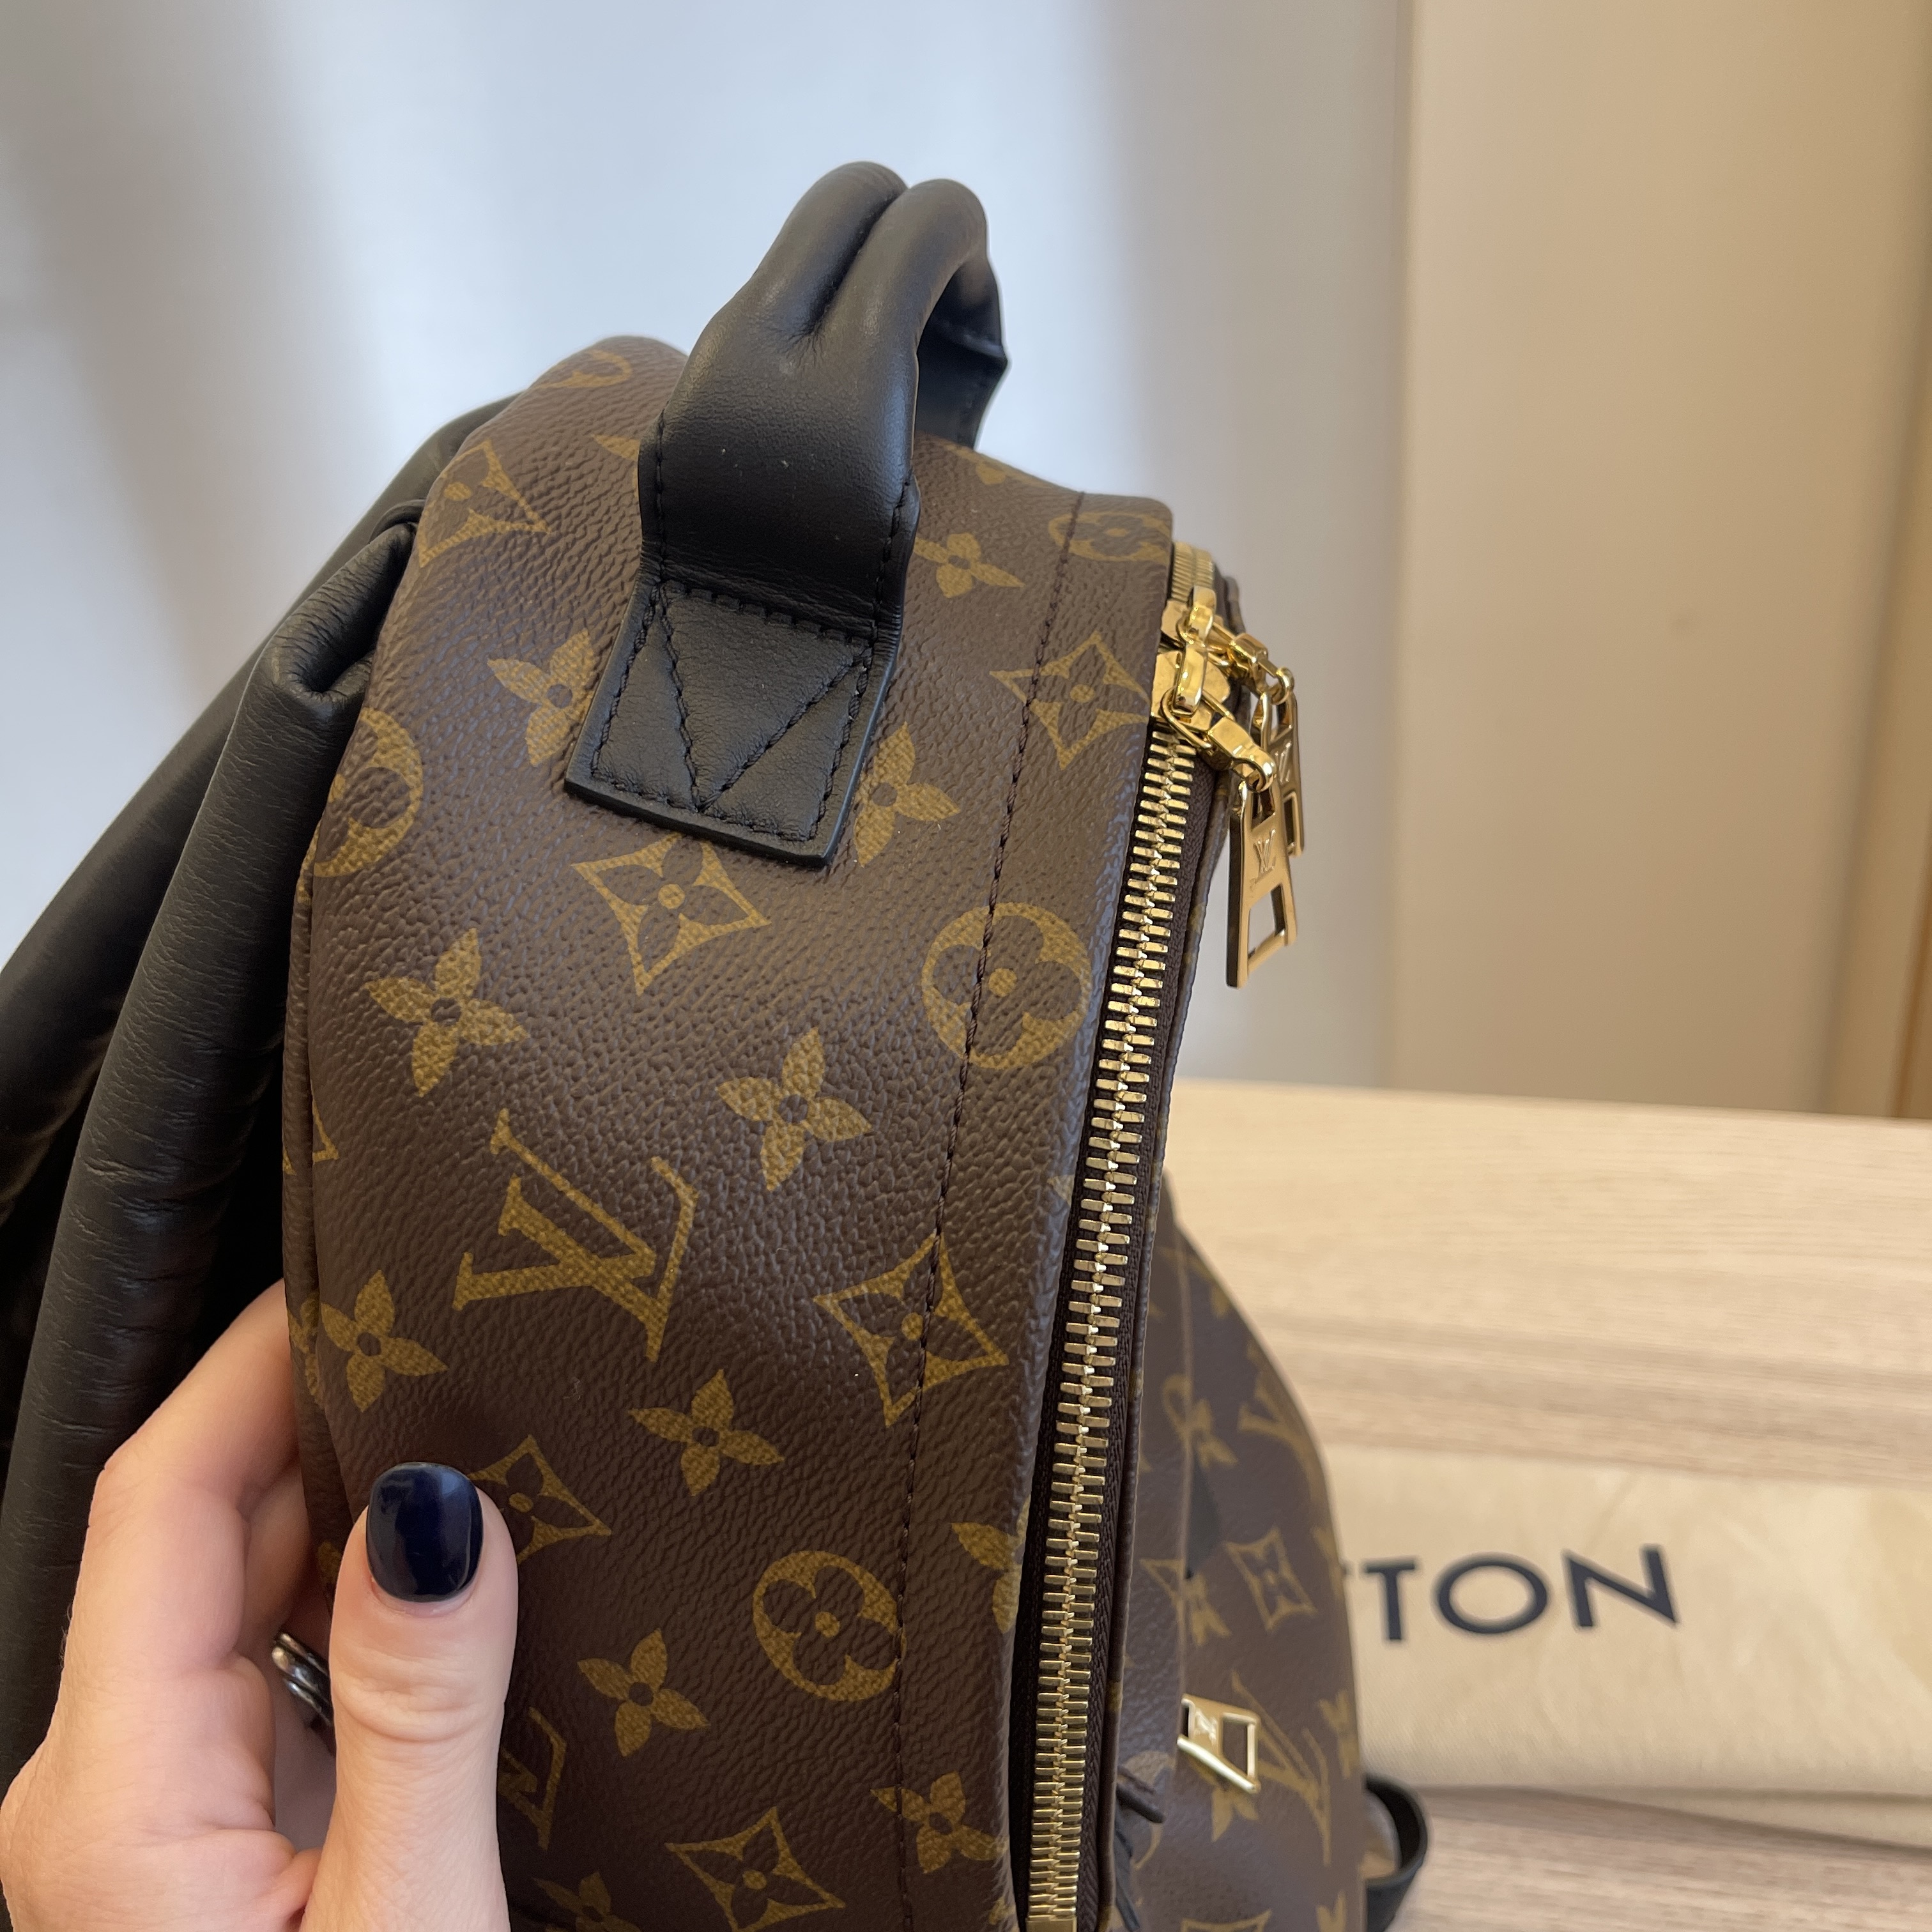 Louis Vuitton Inventpdr Backpack